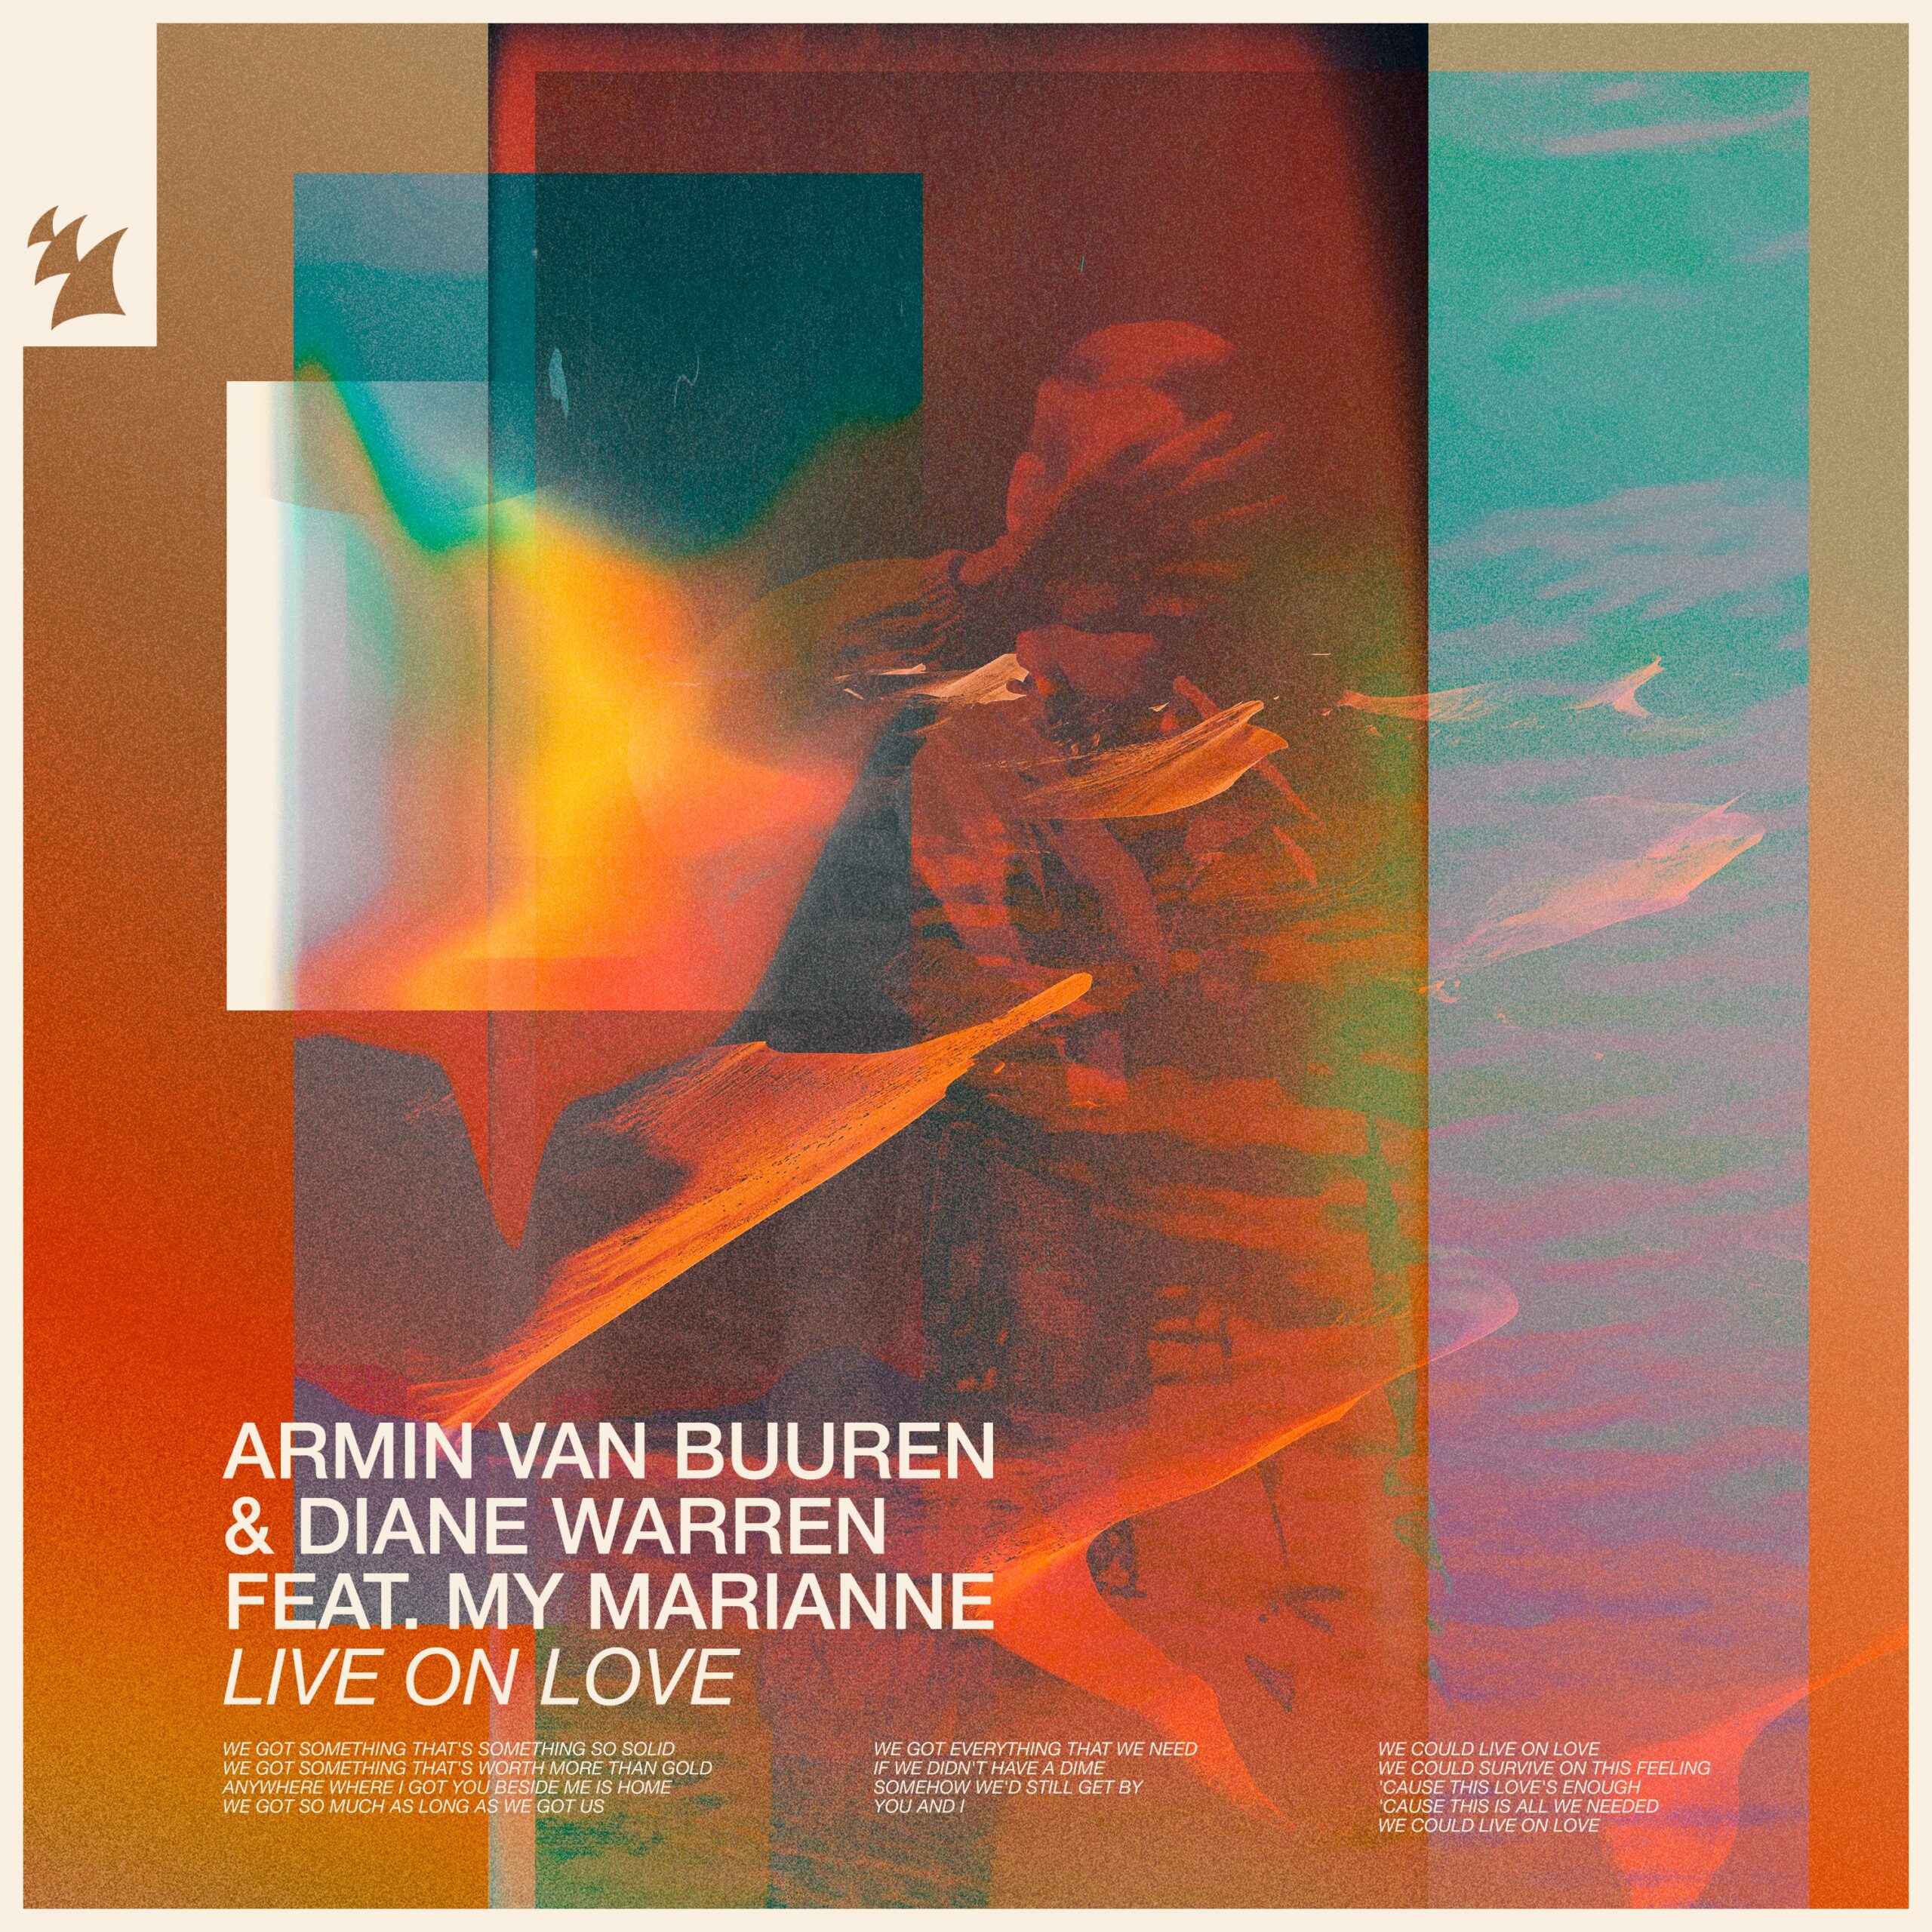 ARMIN VAN BUUREN LINKS UP WITH LEGENDARY SONGWRITER DIANE WARREN FOR ‘LIVE ON LOVE’ (FEAT. MY MARIANNE)